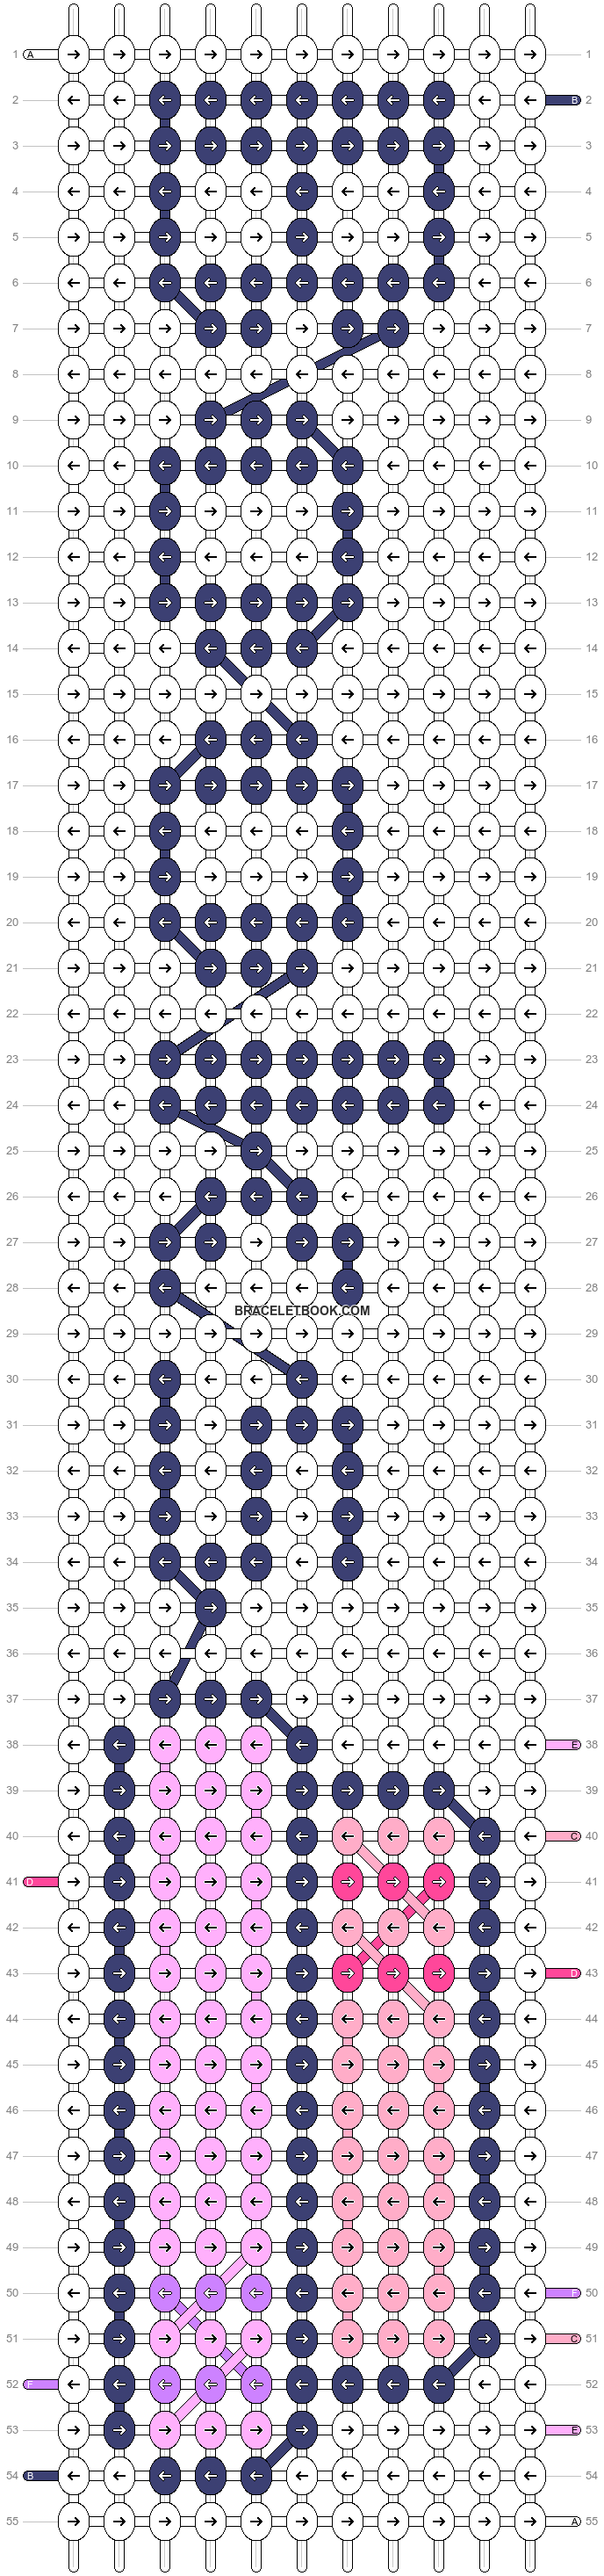 Alpha pattern #88815 variation #161716 pattern